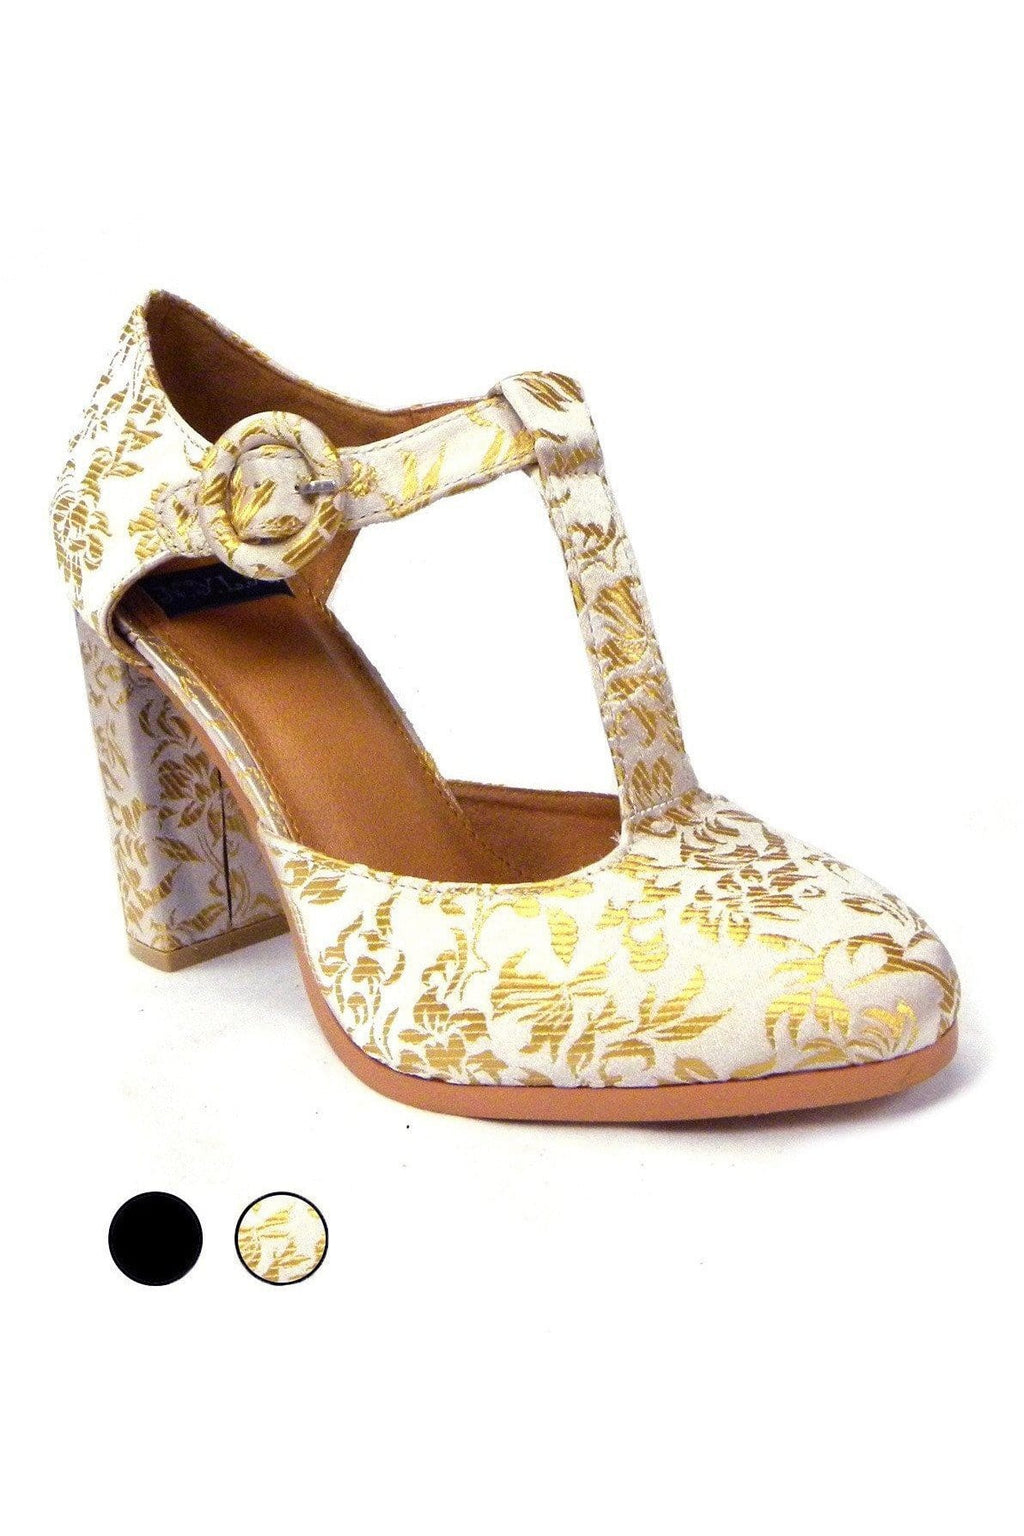 N.Y.L.A. Shoes SHOES 6 / IVORY GOLD BRO N.Y.L.A. Shoes Olysing Women's T-Strap 4" Heels in Black or Ivory-Gold Brocade